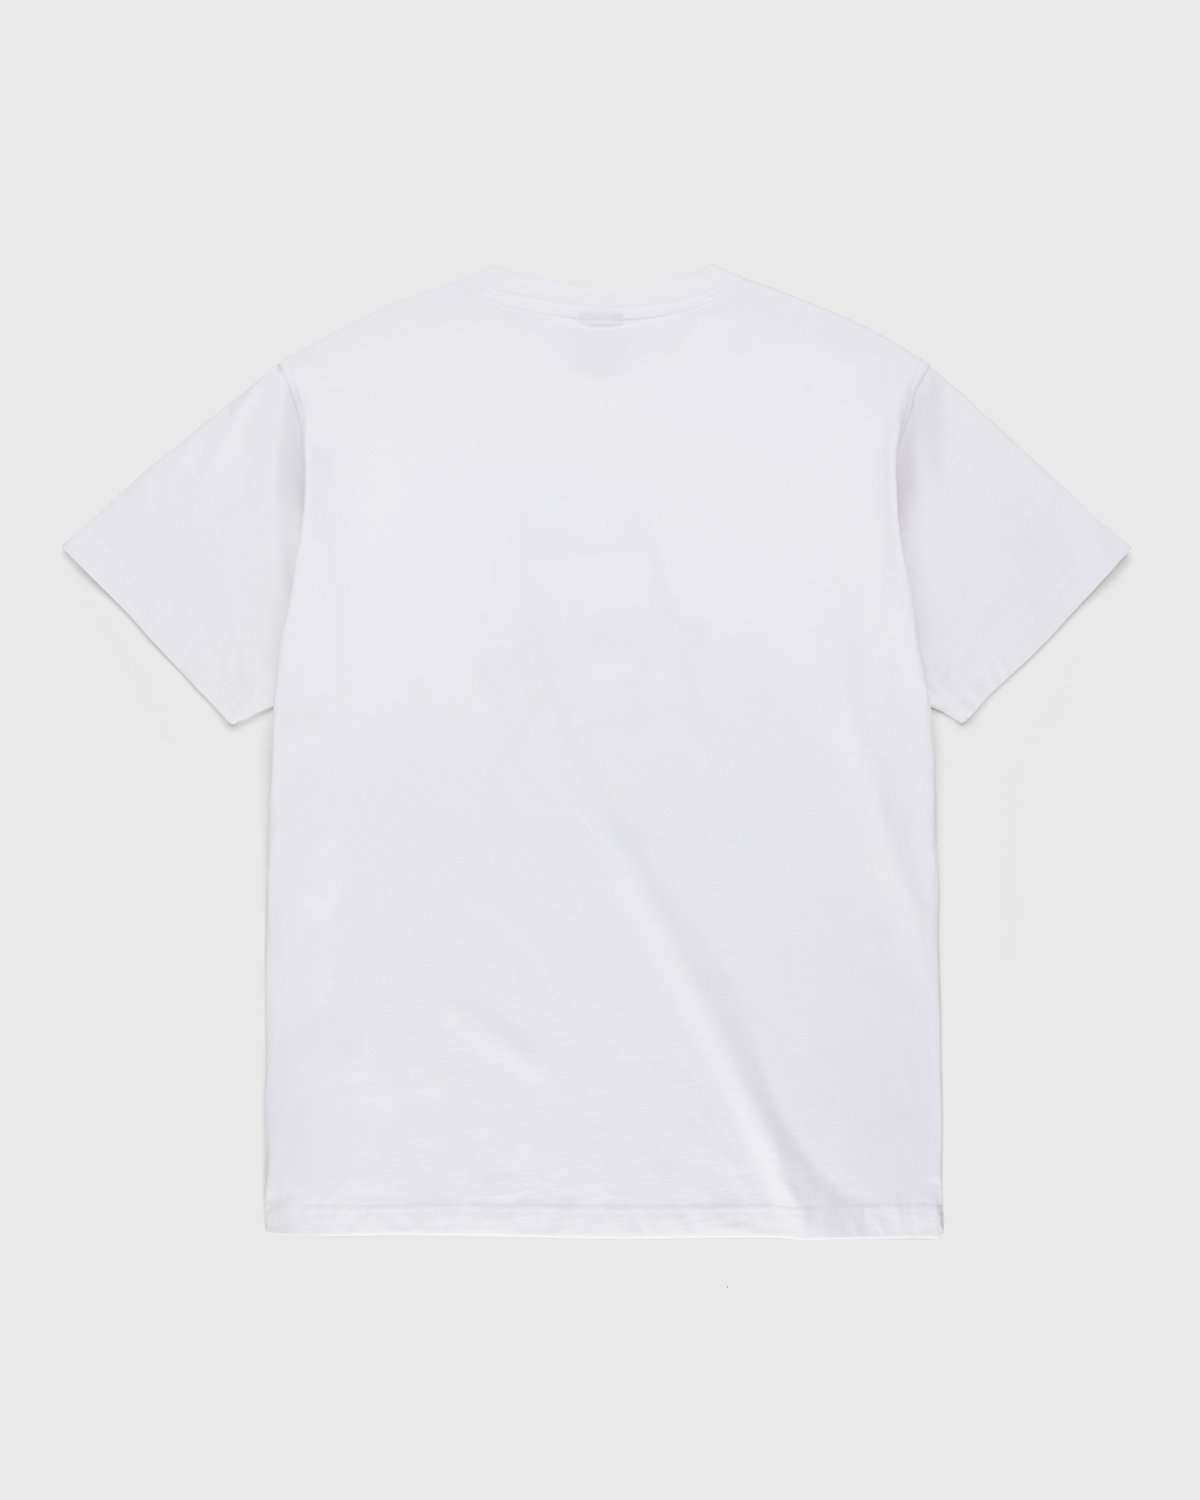 New Balance - Conversations Amongst Us Heavyweight T-Shirt White - Clothing - White - Image 2